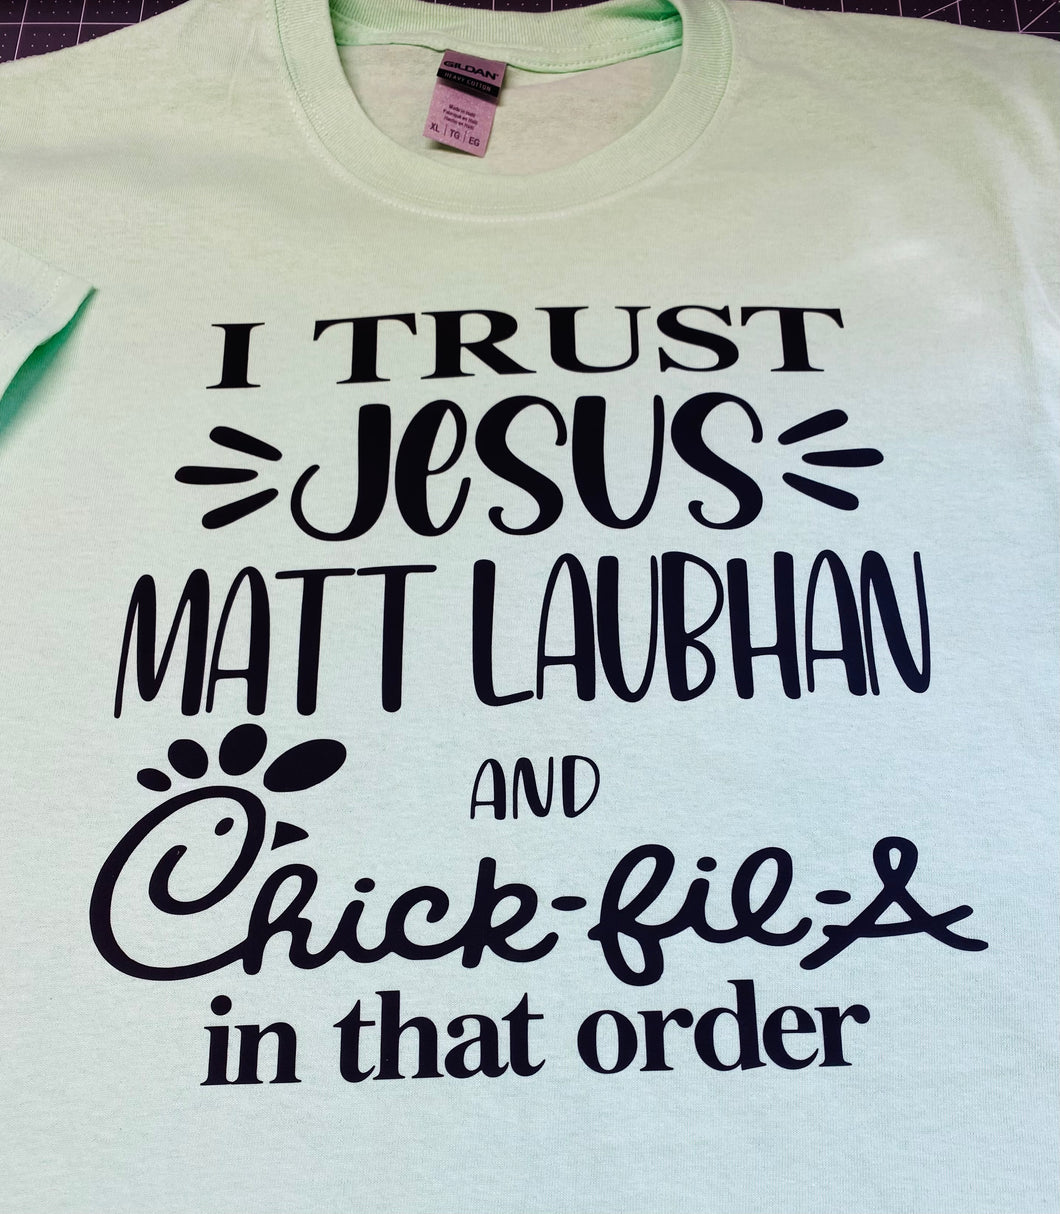 I trust Jesus and Matt